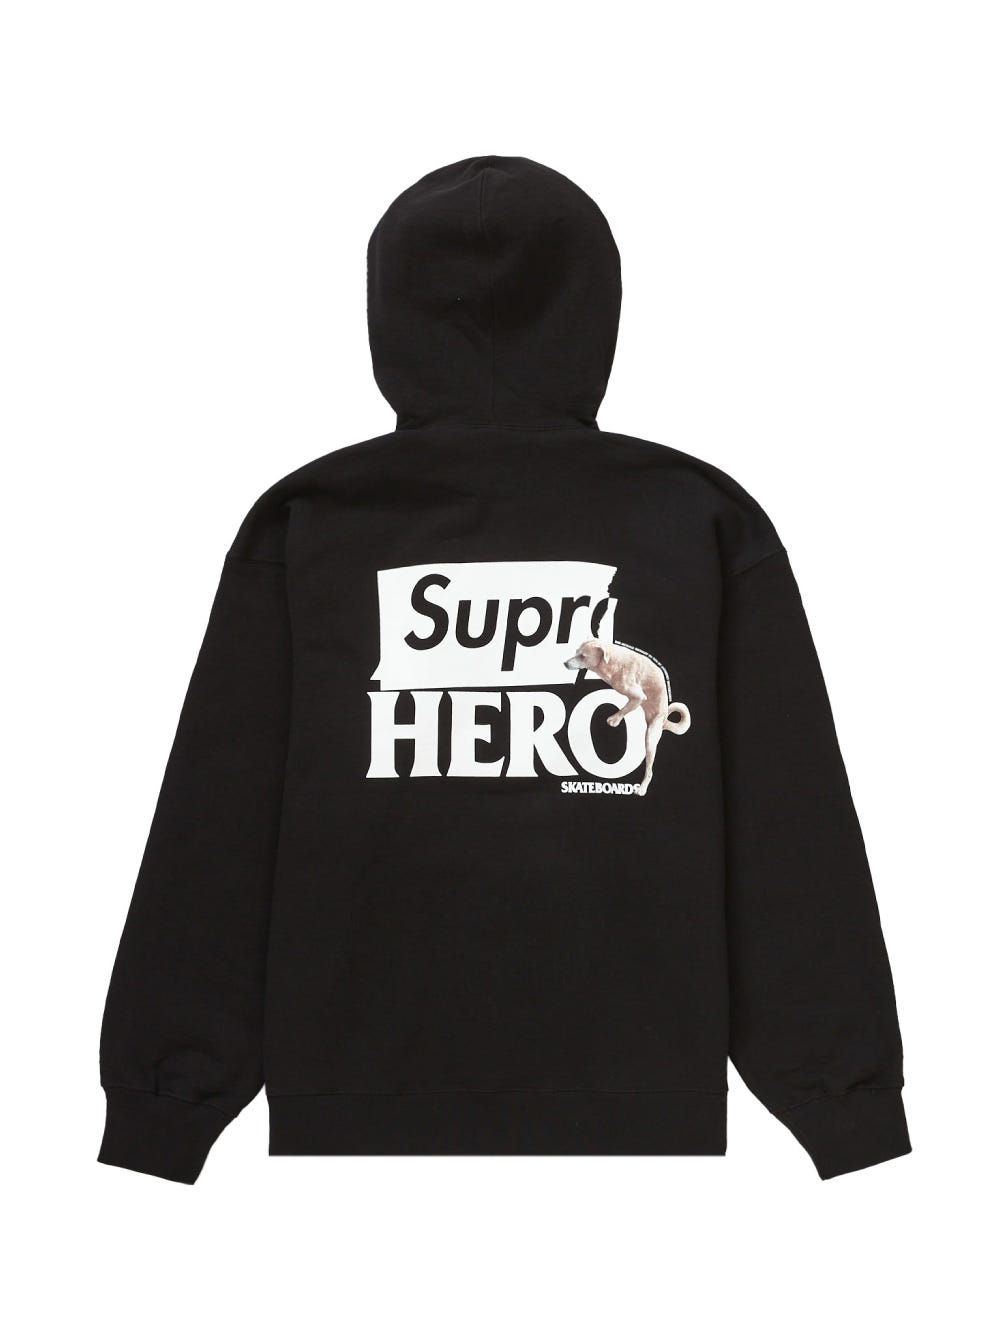 Where To Buy Supreme Hoodie? - Supreme Hoodie - Medium